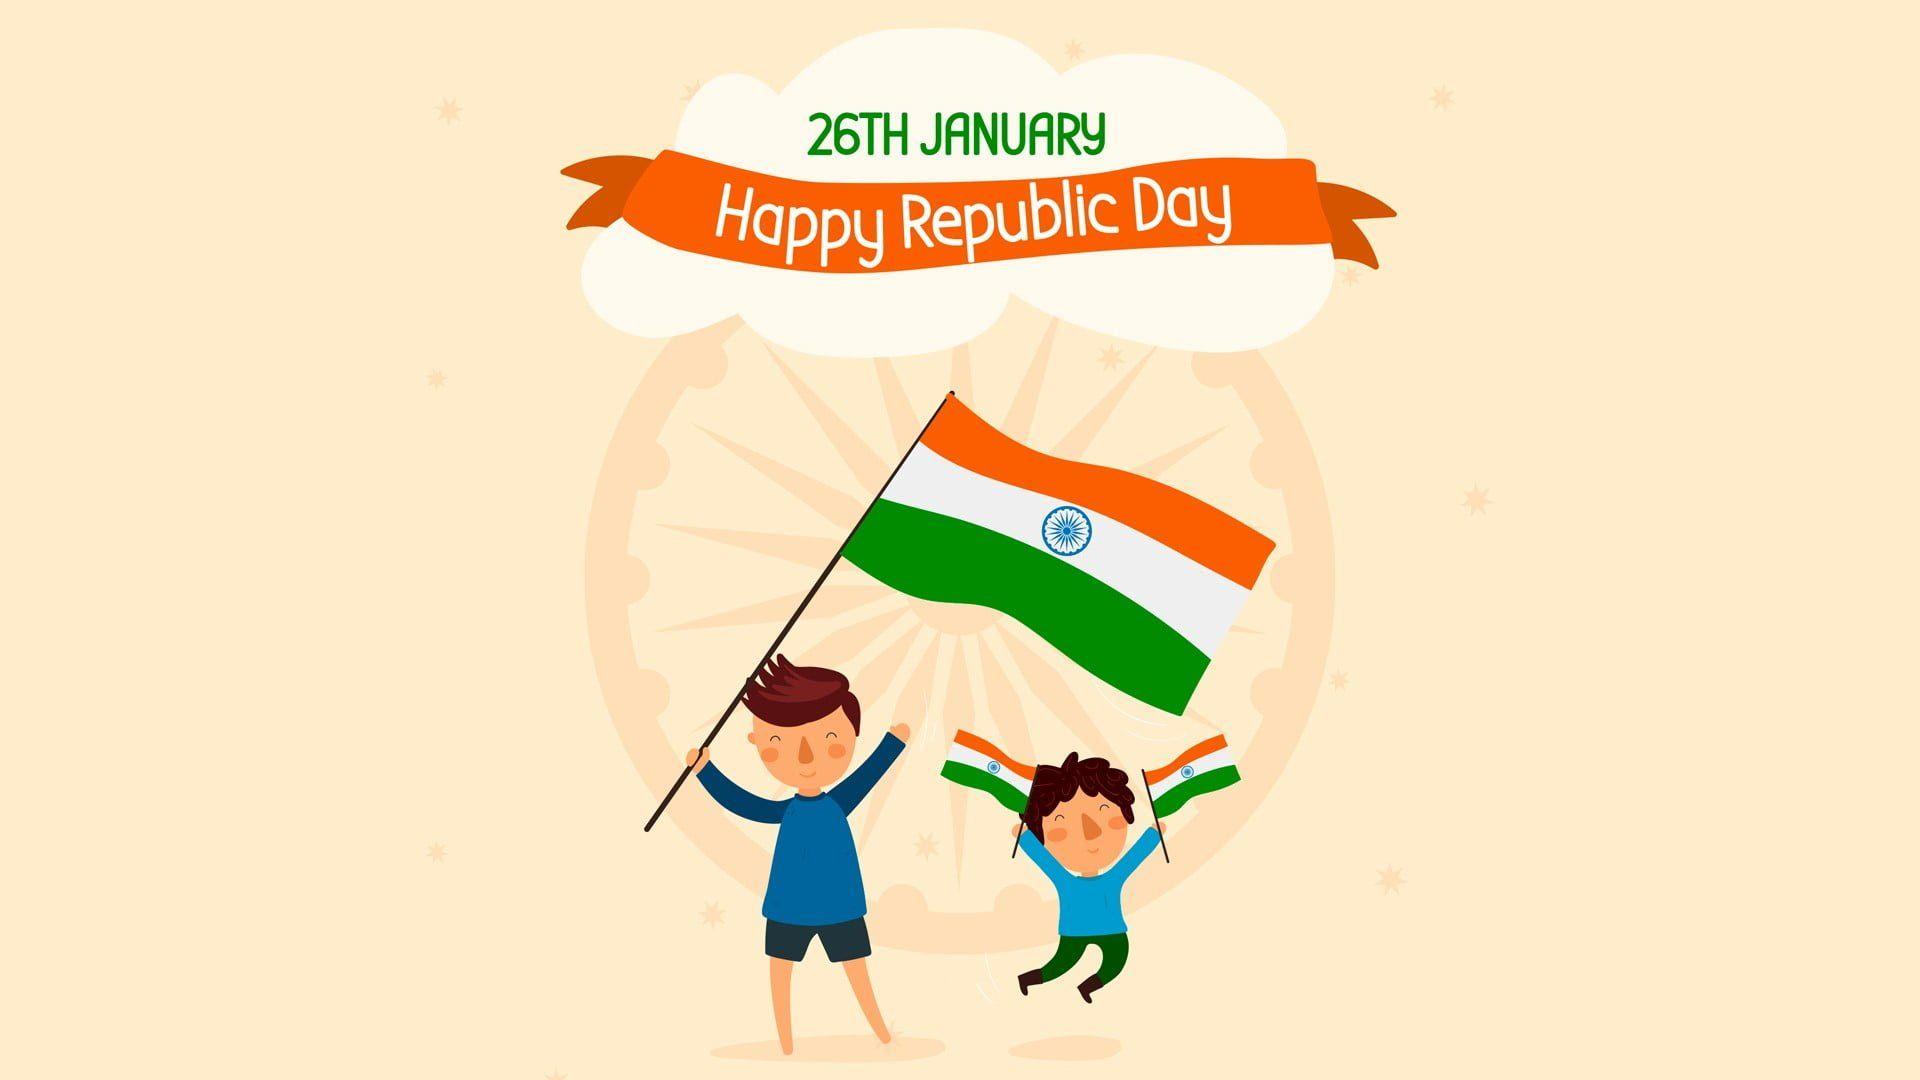 Happy Republic Day Image Happy Republic Day